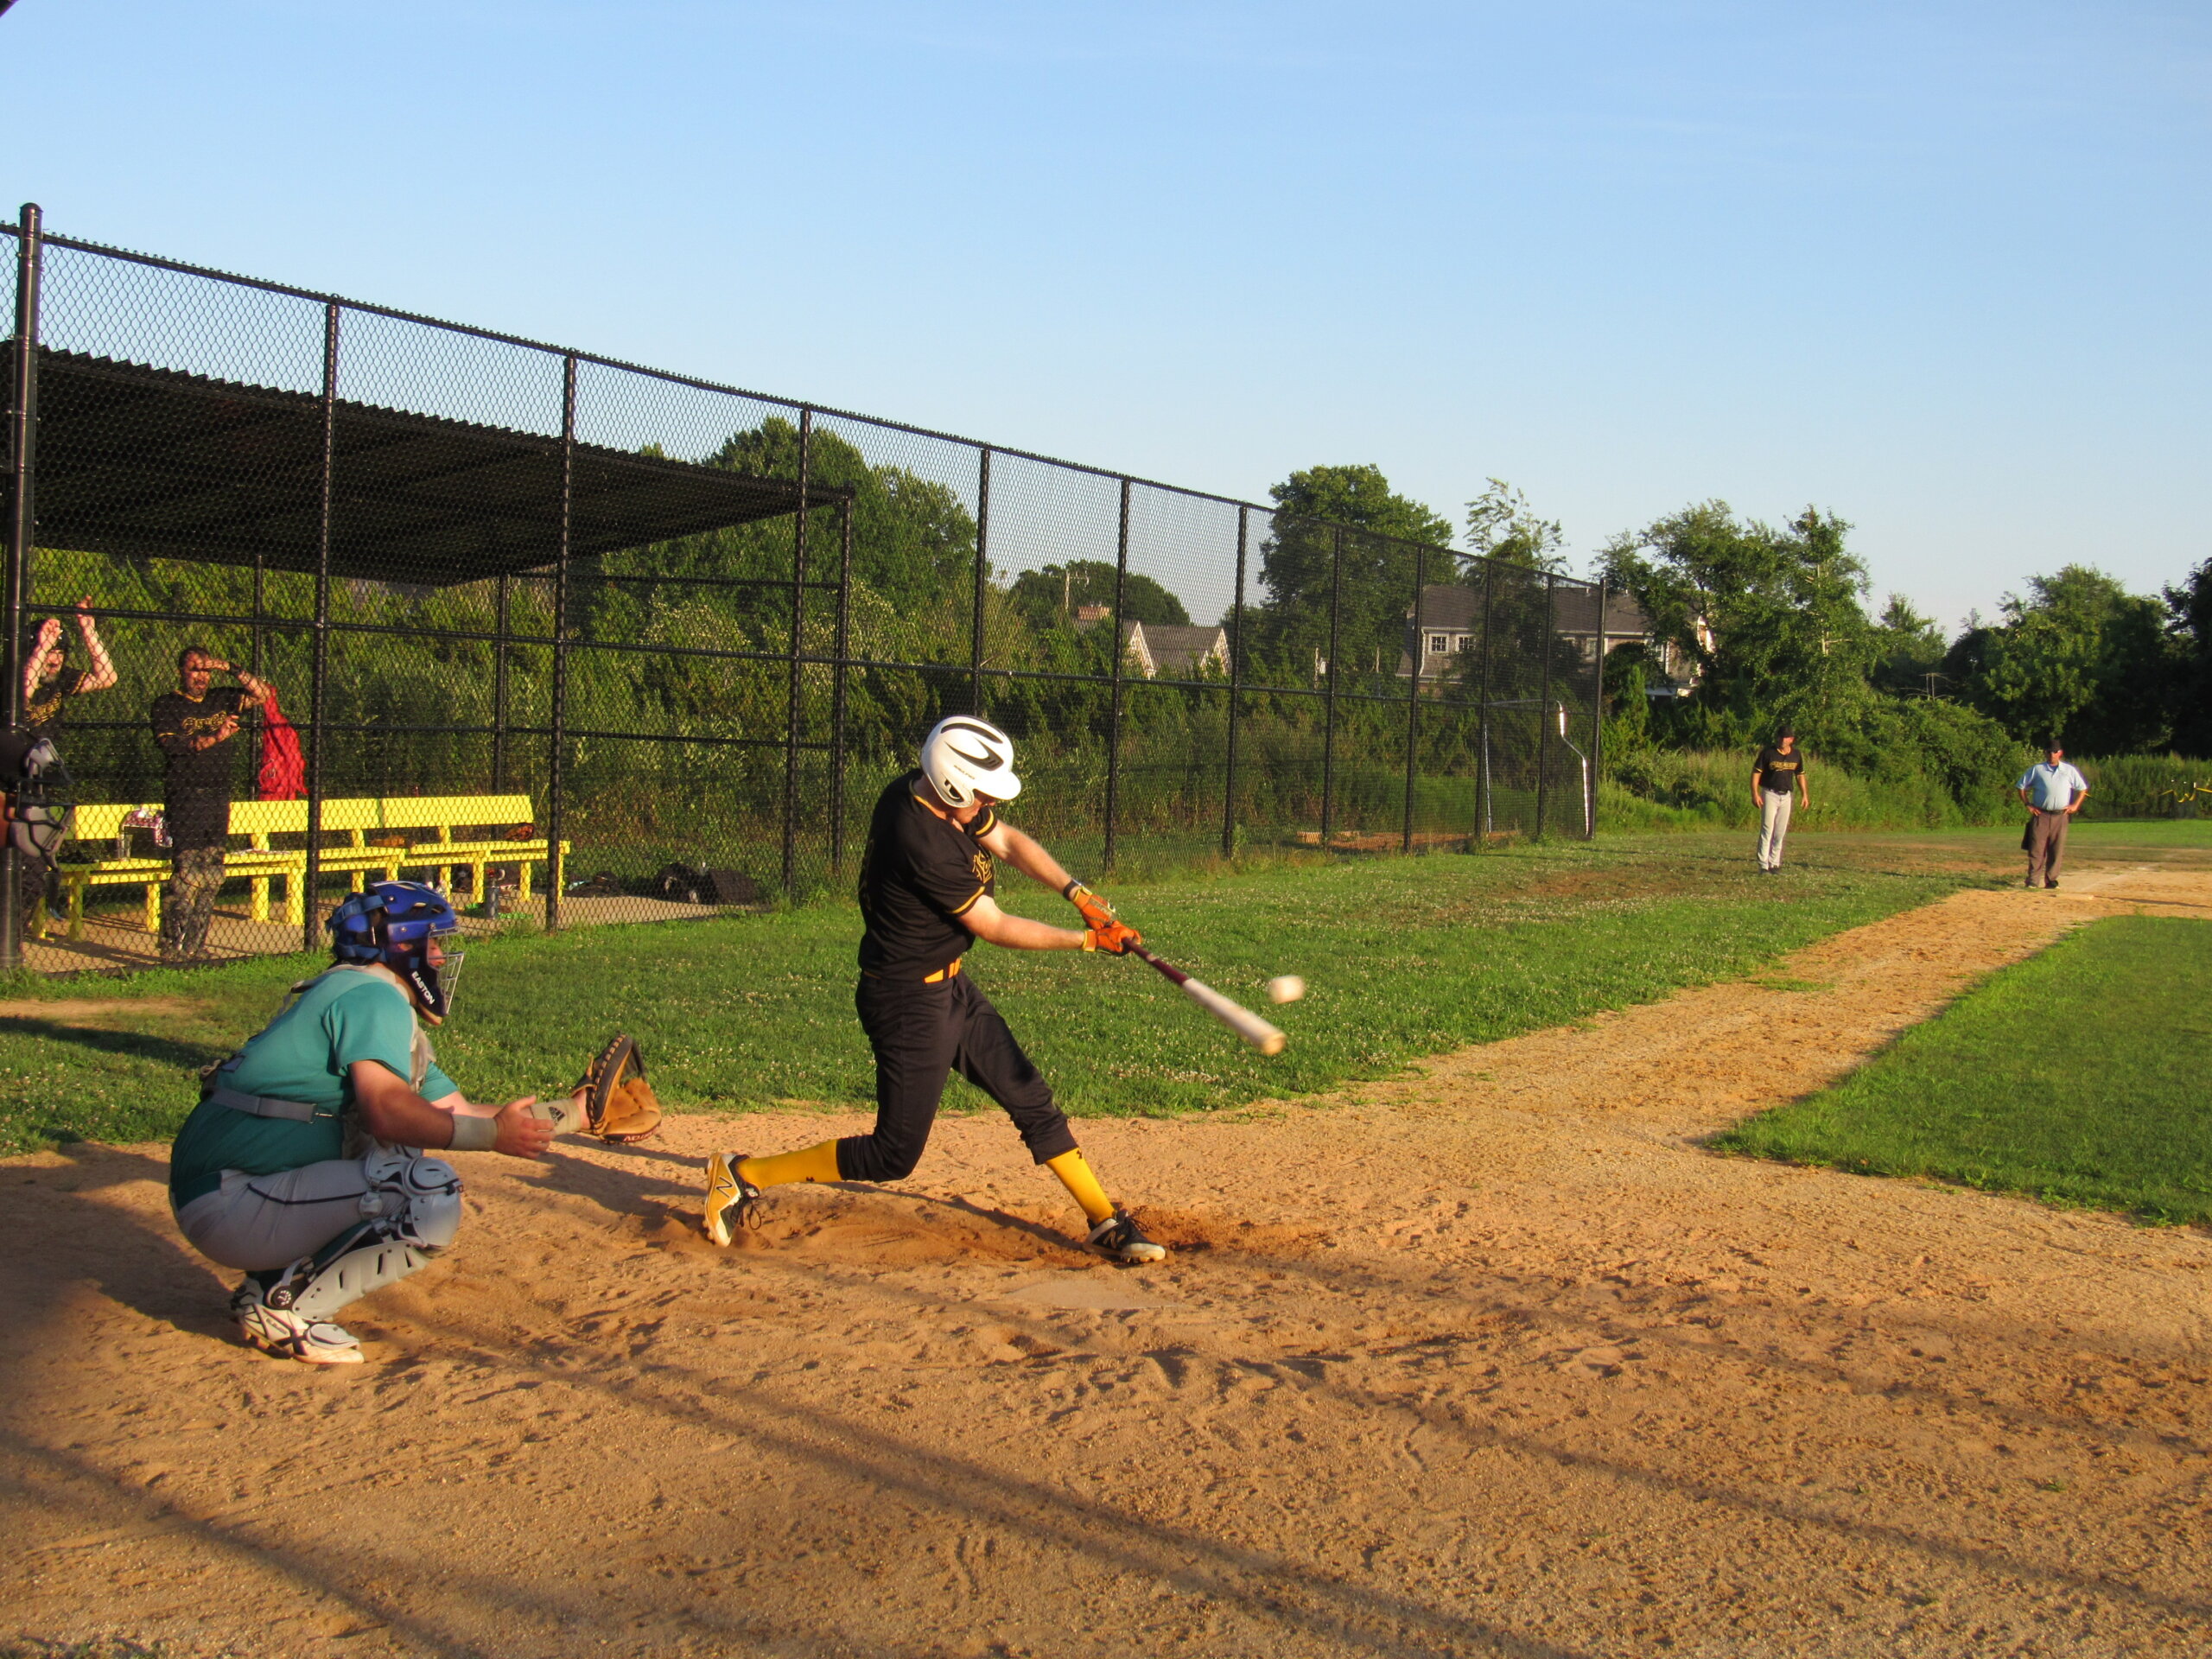 An East End Osprey at bat in the Hamptons Adult Hardball League